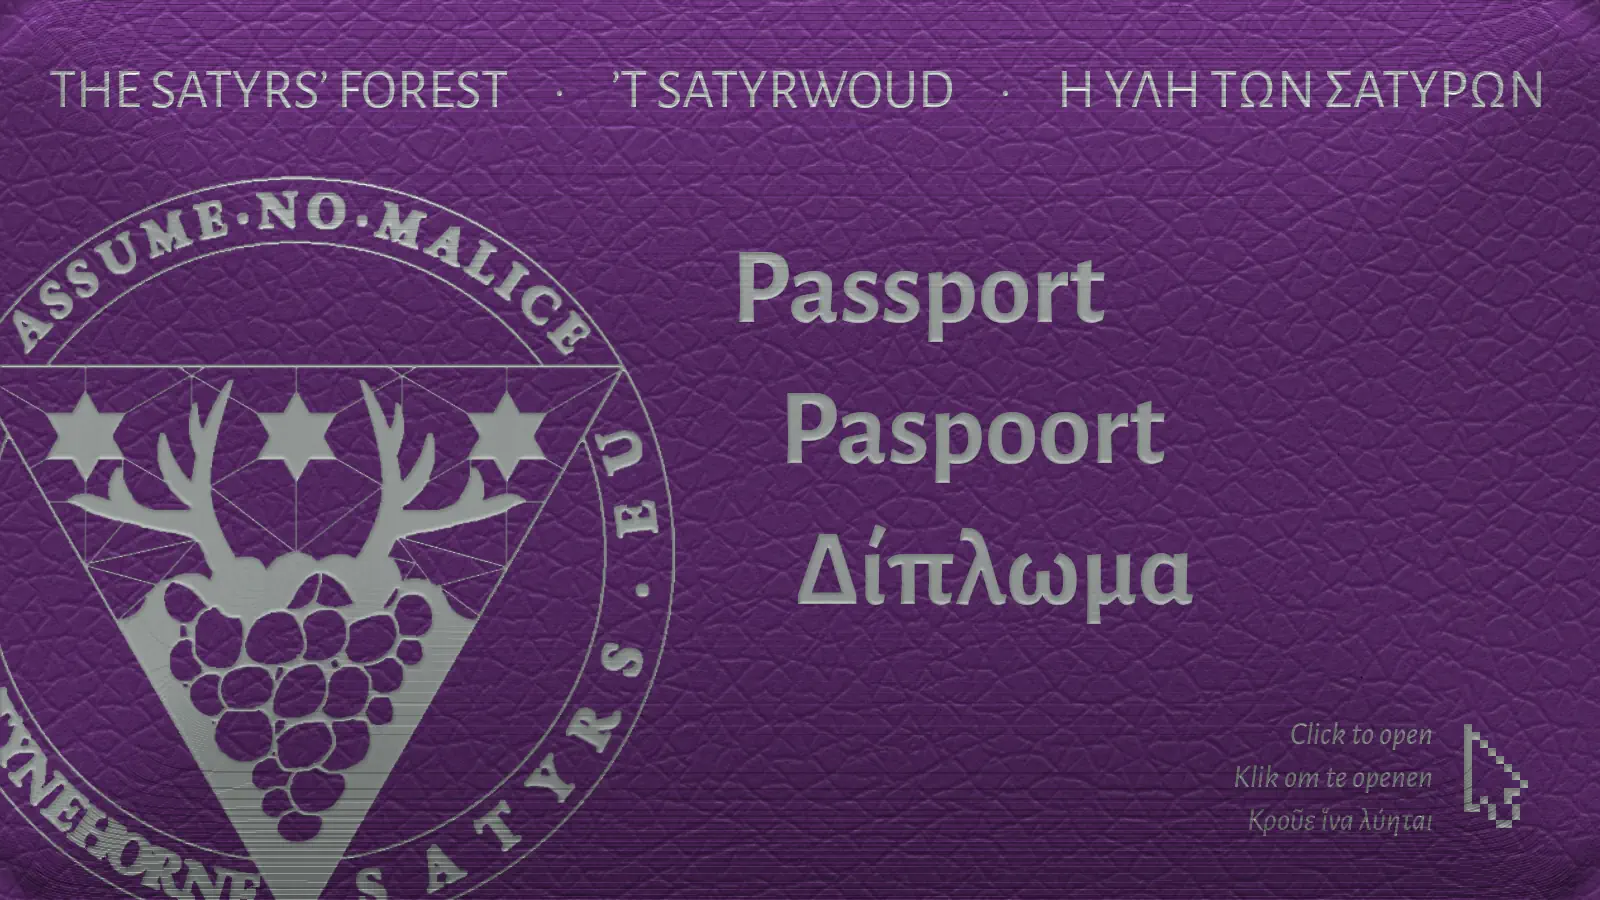 A passport cover